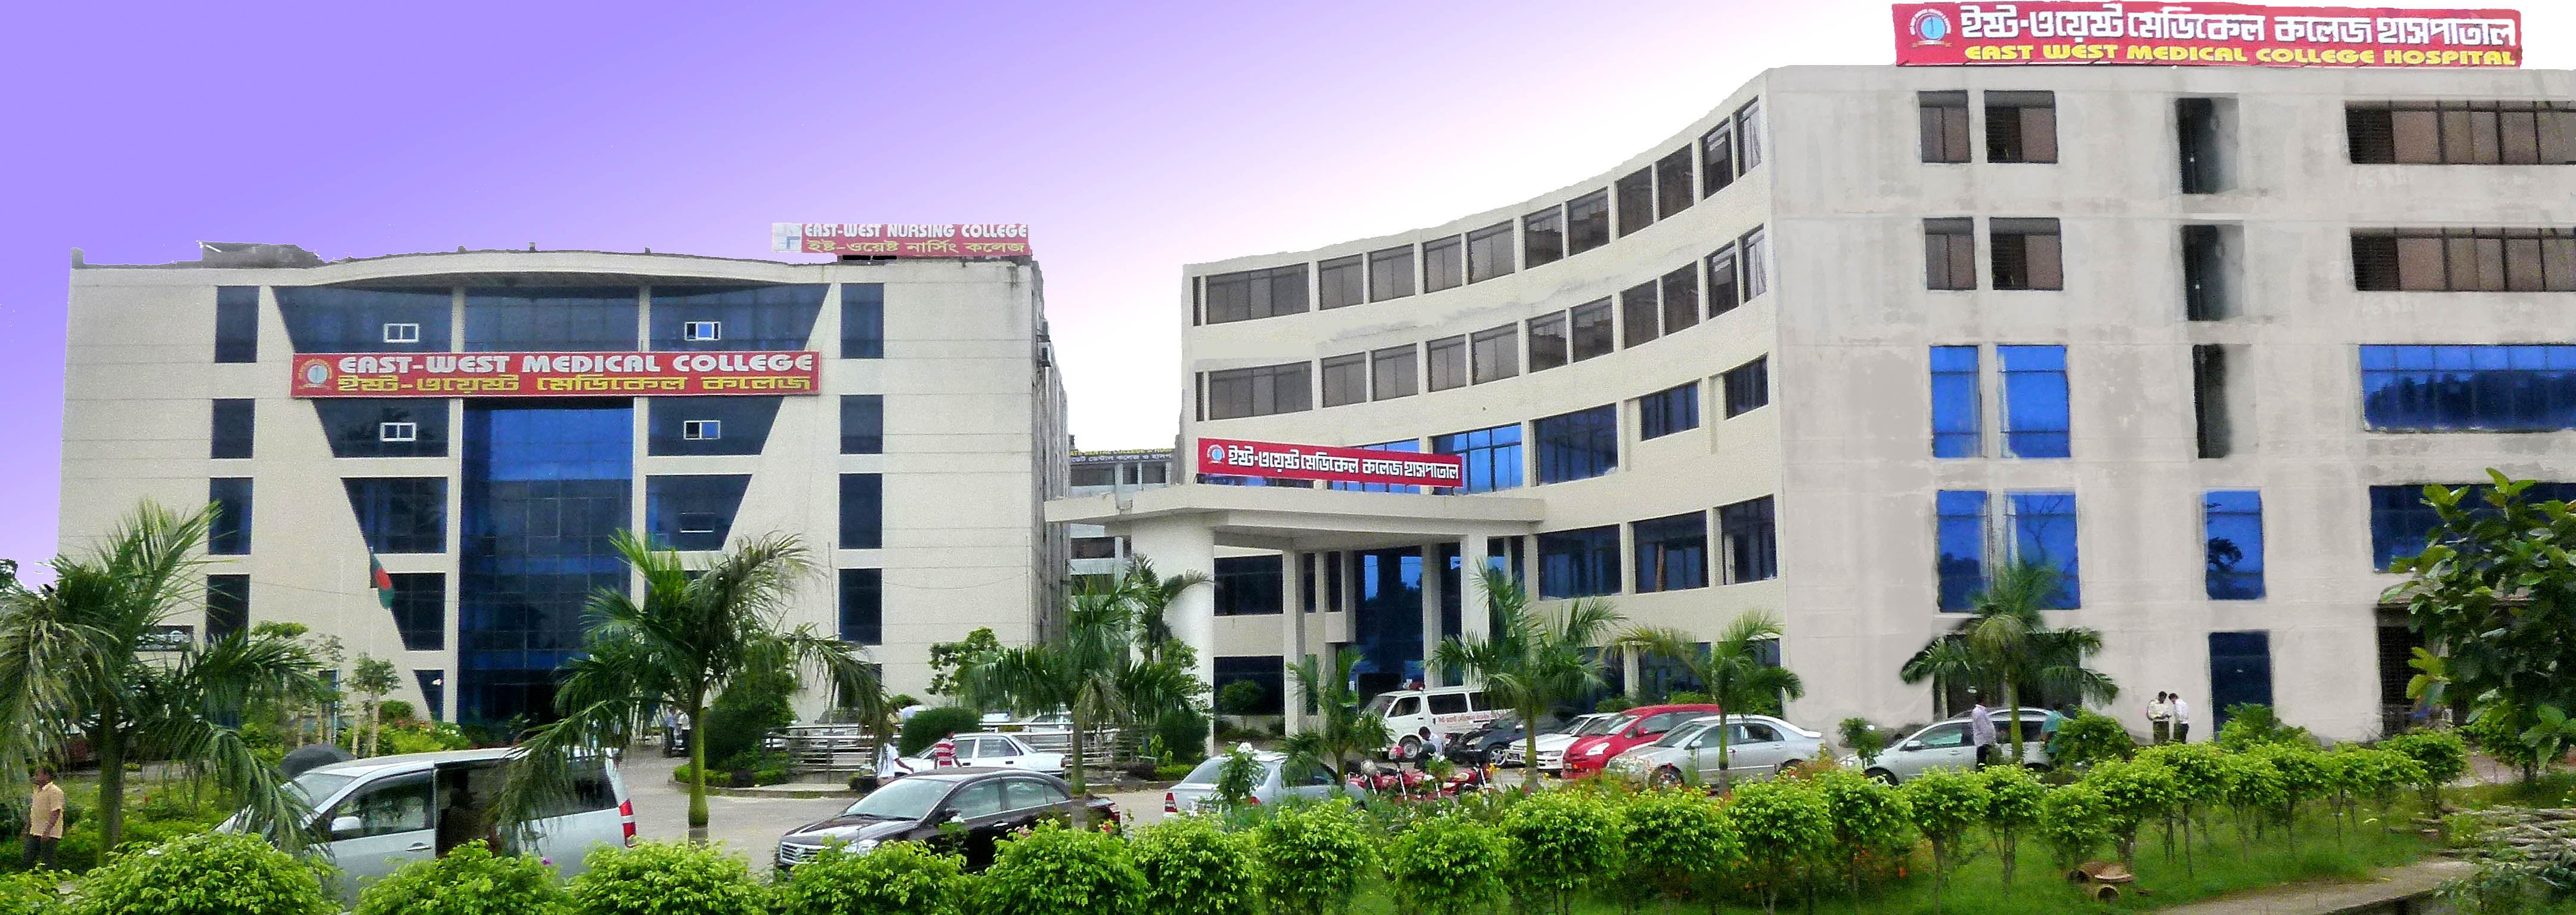 east-west-medical-college